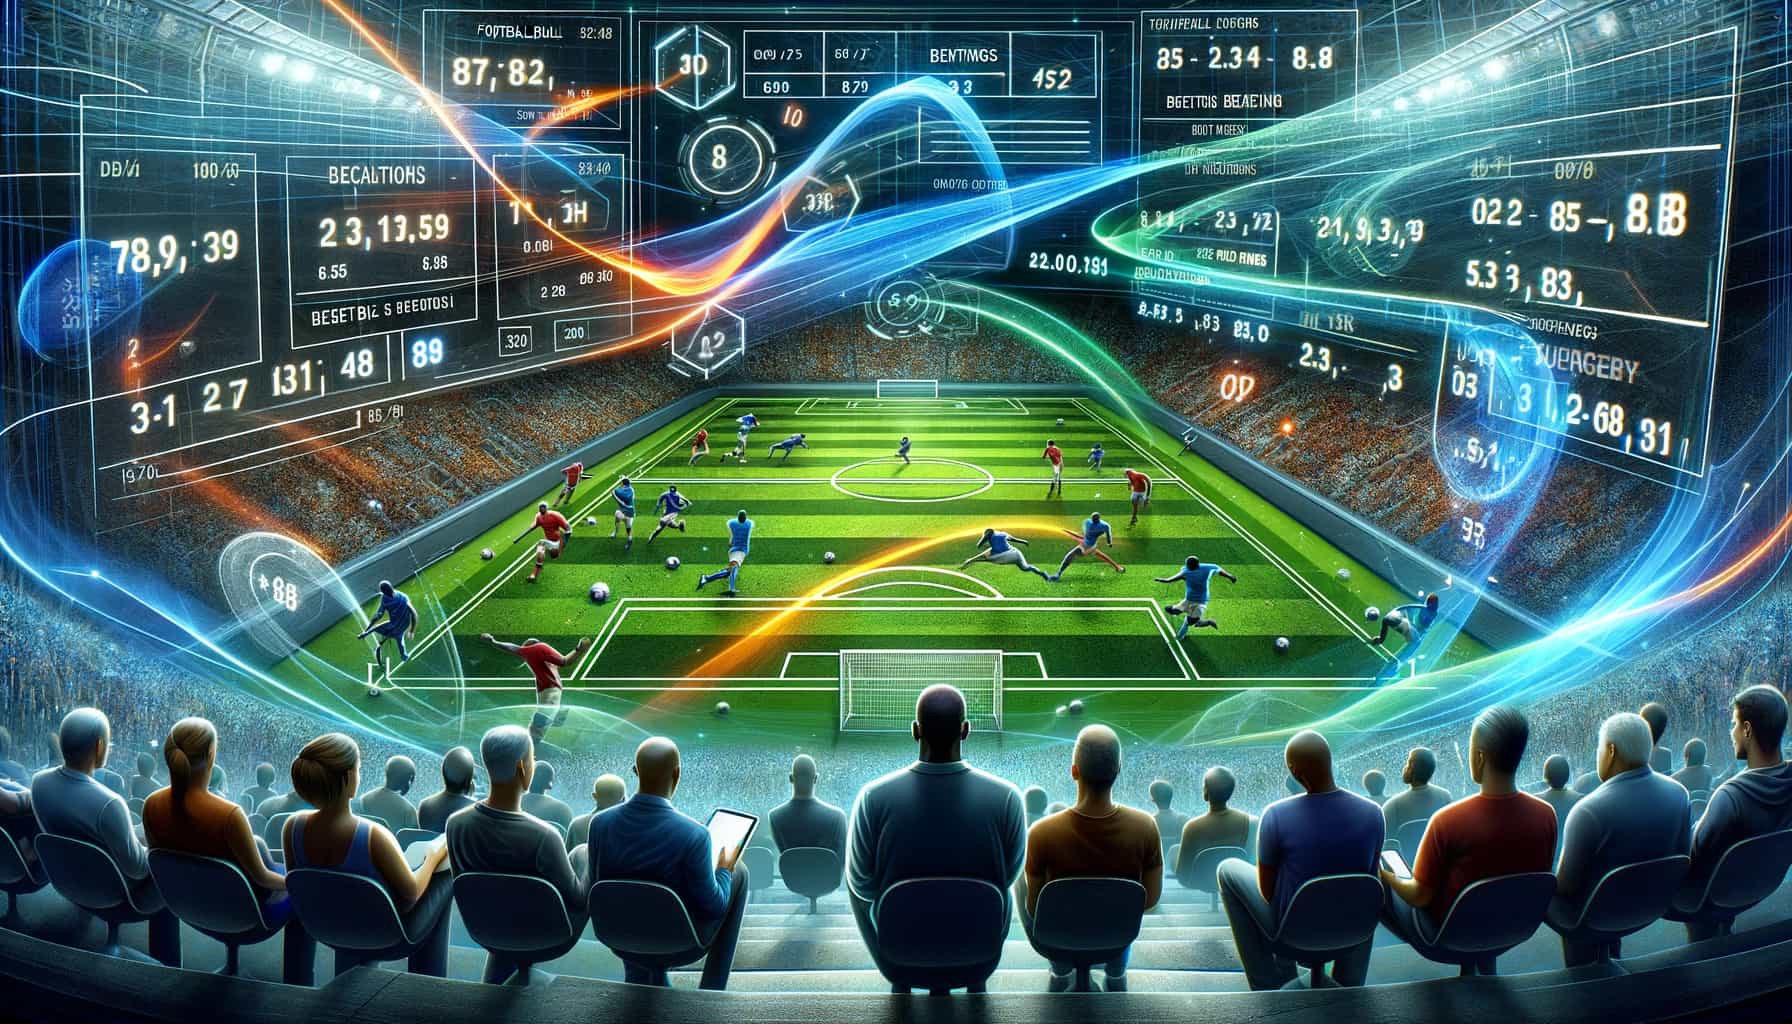 fotball betting på nett